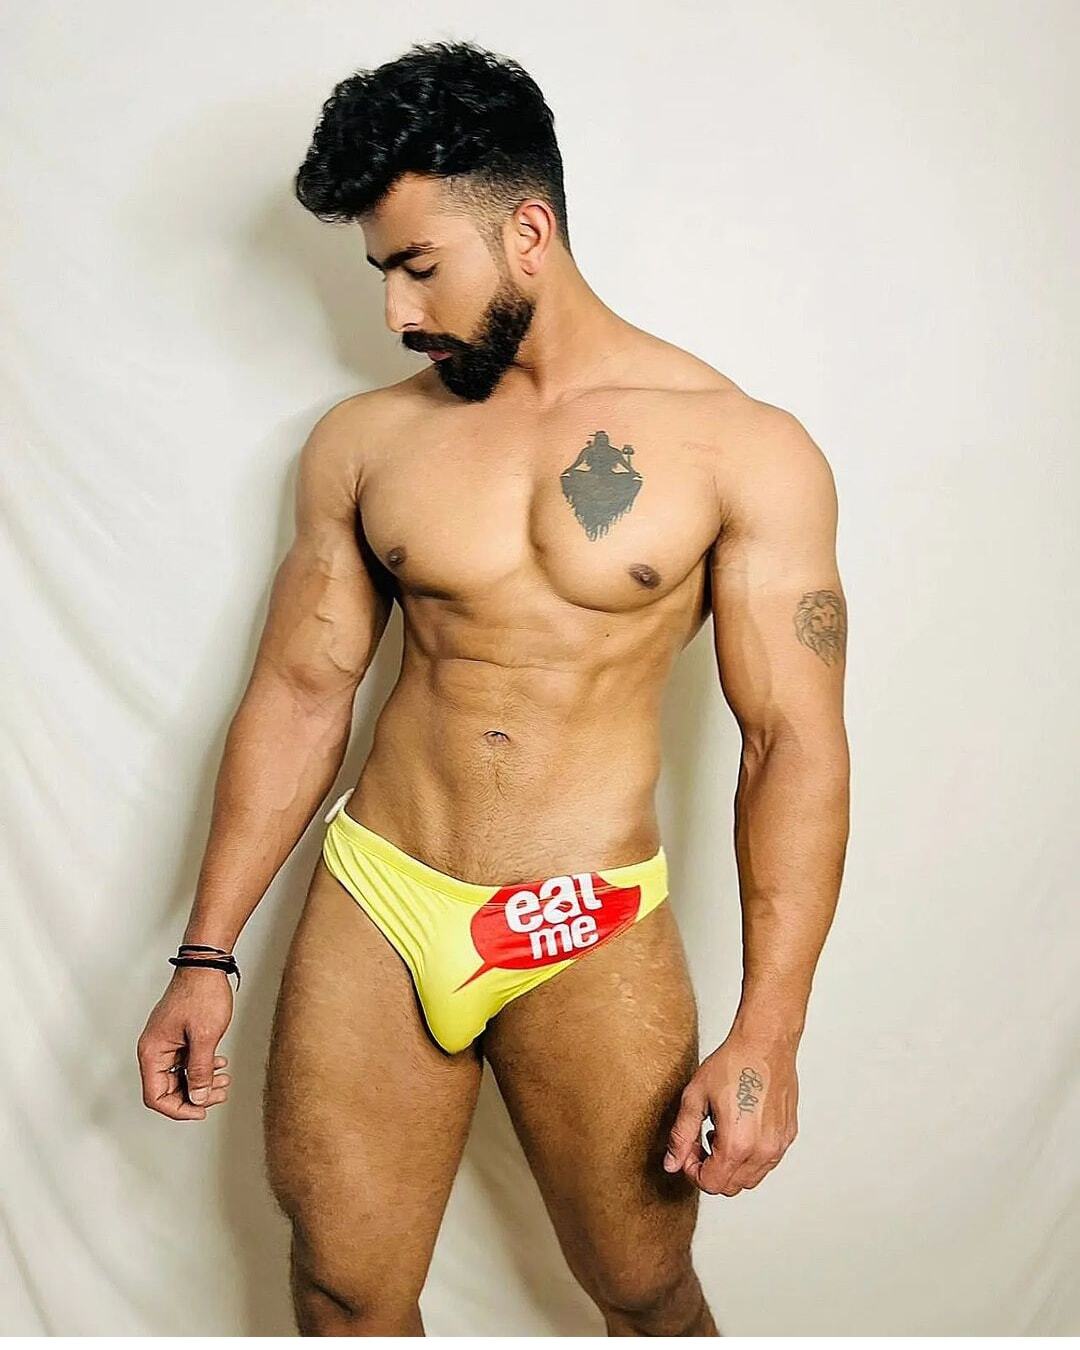 Bf Shiva Xxx - Indian straight and top hunk Shiva Rajput hot pics in underwears - photo 5  - BoyFriendTV.com